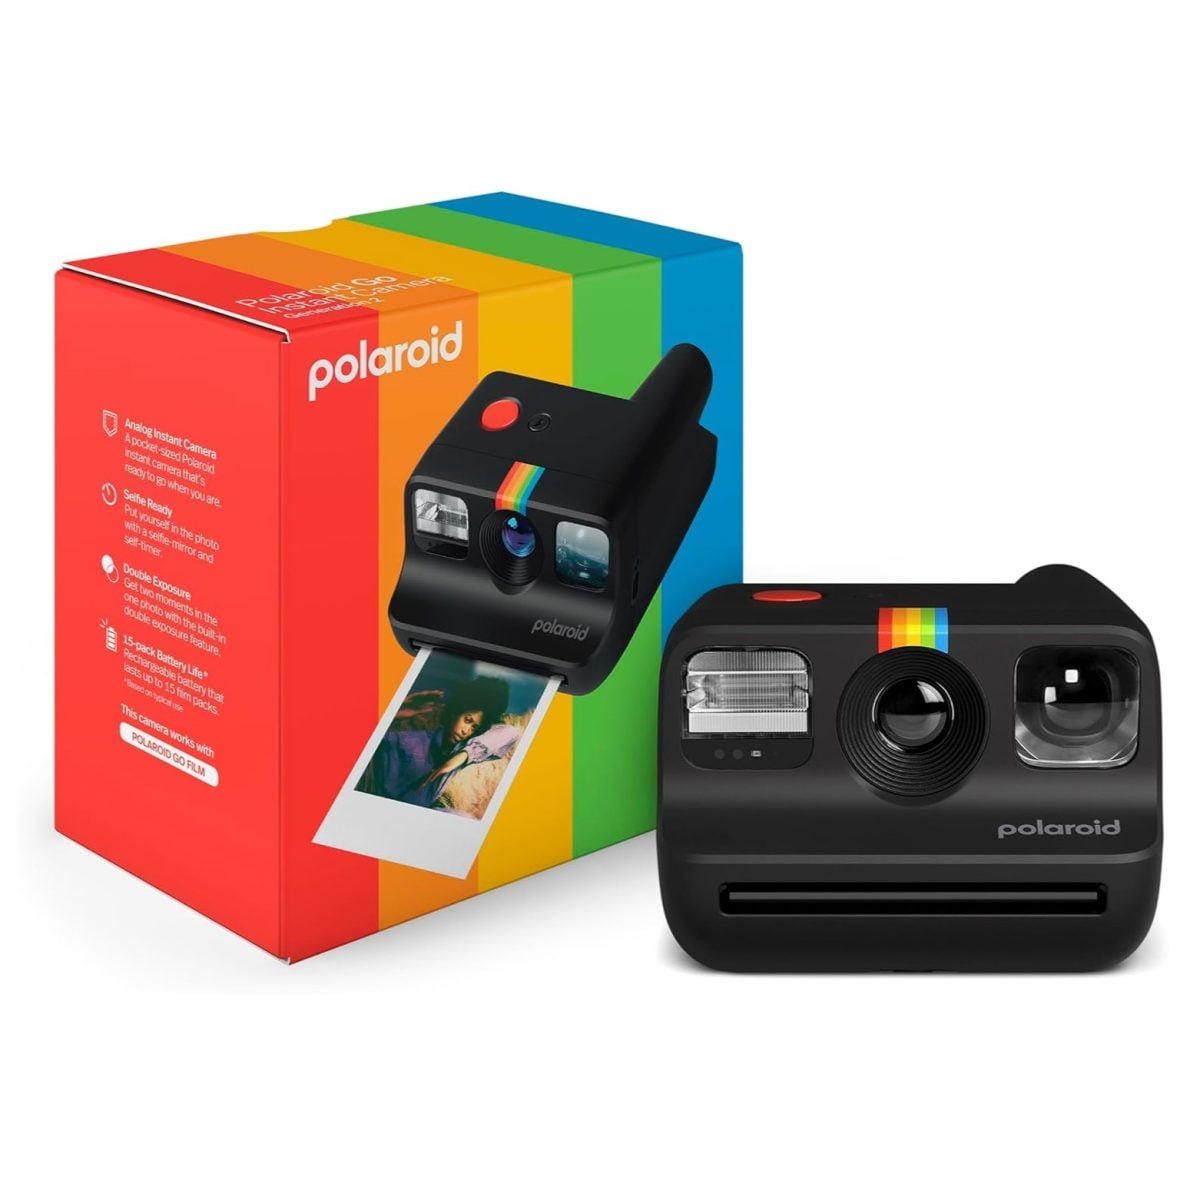 Polaroid Go Generation 2 - Mini Instant Film Camera - Black (9096) - Only Compatible With Go Film